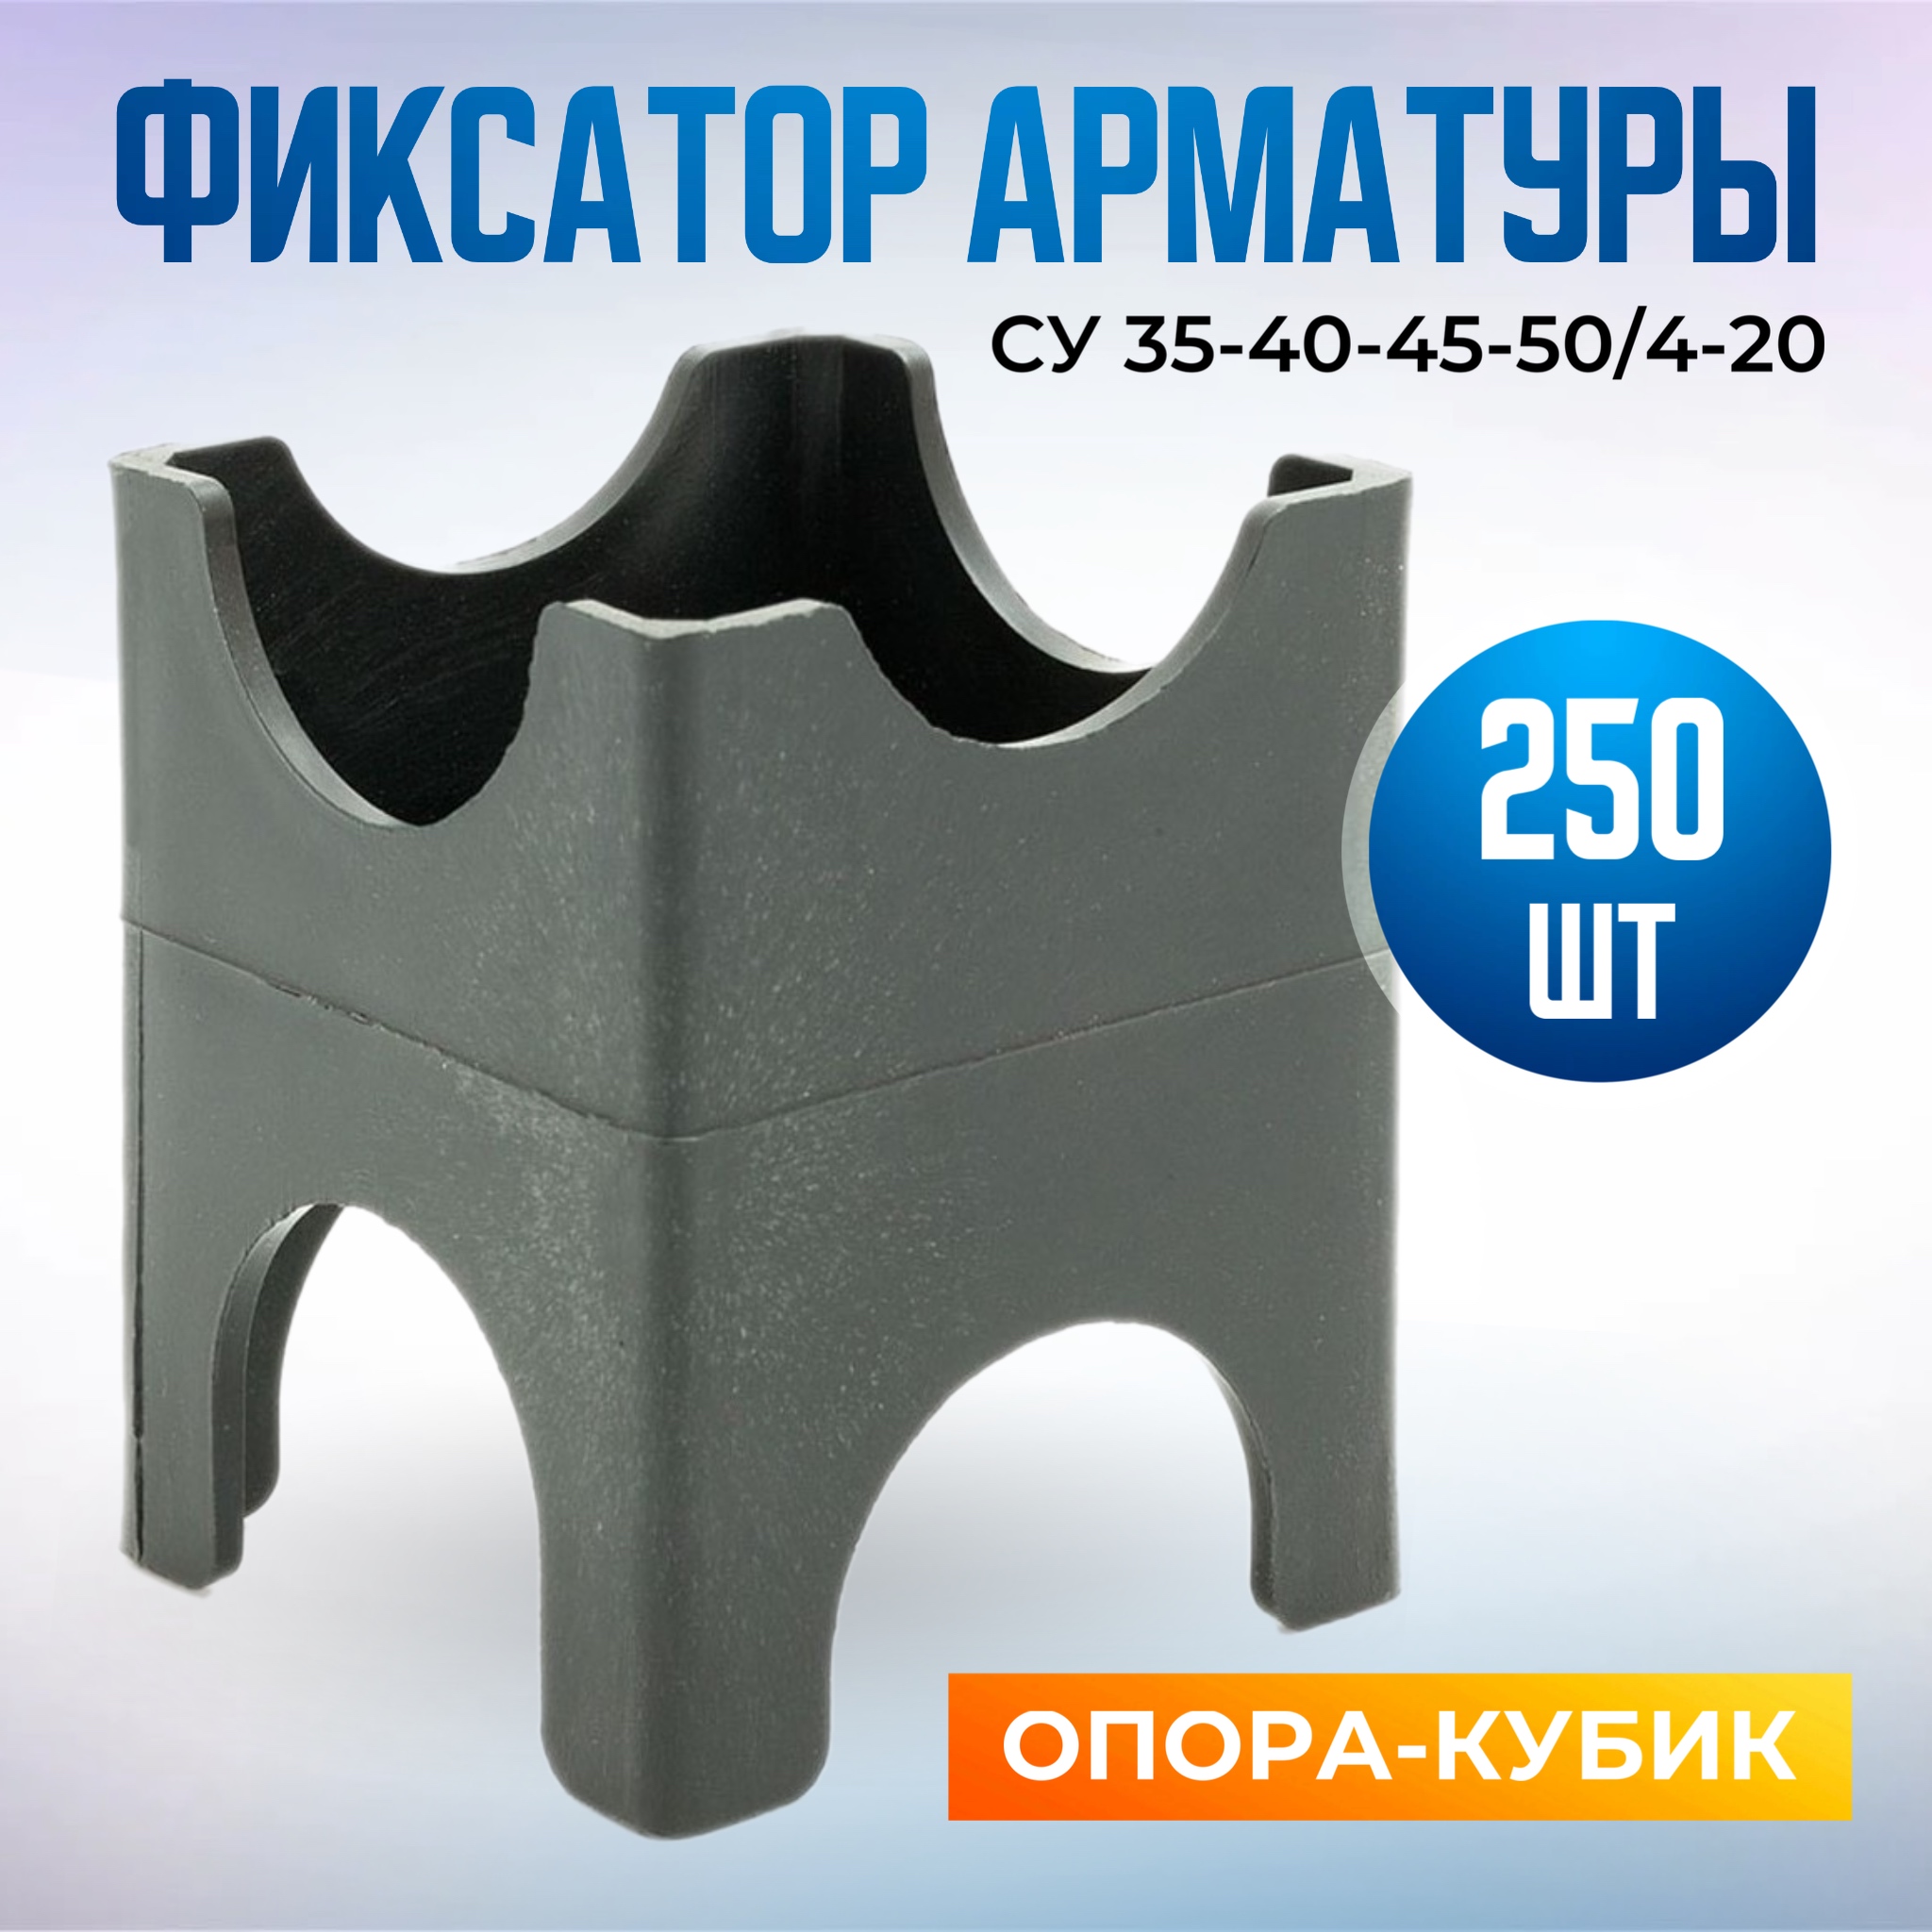 Фиксатор арматуры опора-кубик СУ 35-40-45-50/4-20, в наборе 250 штук